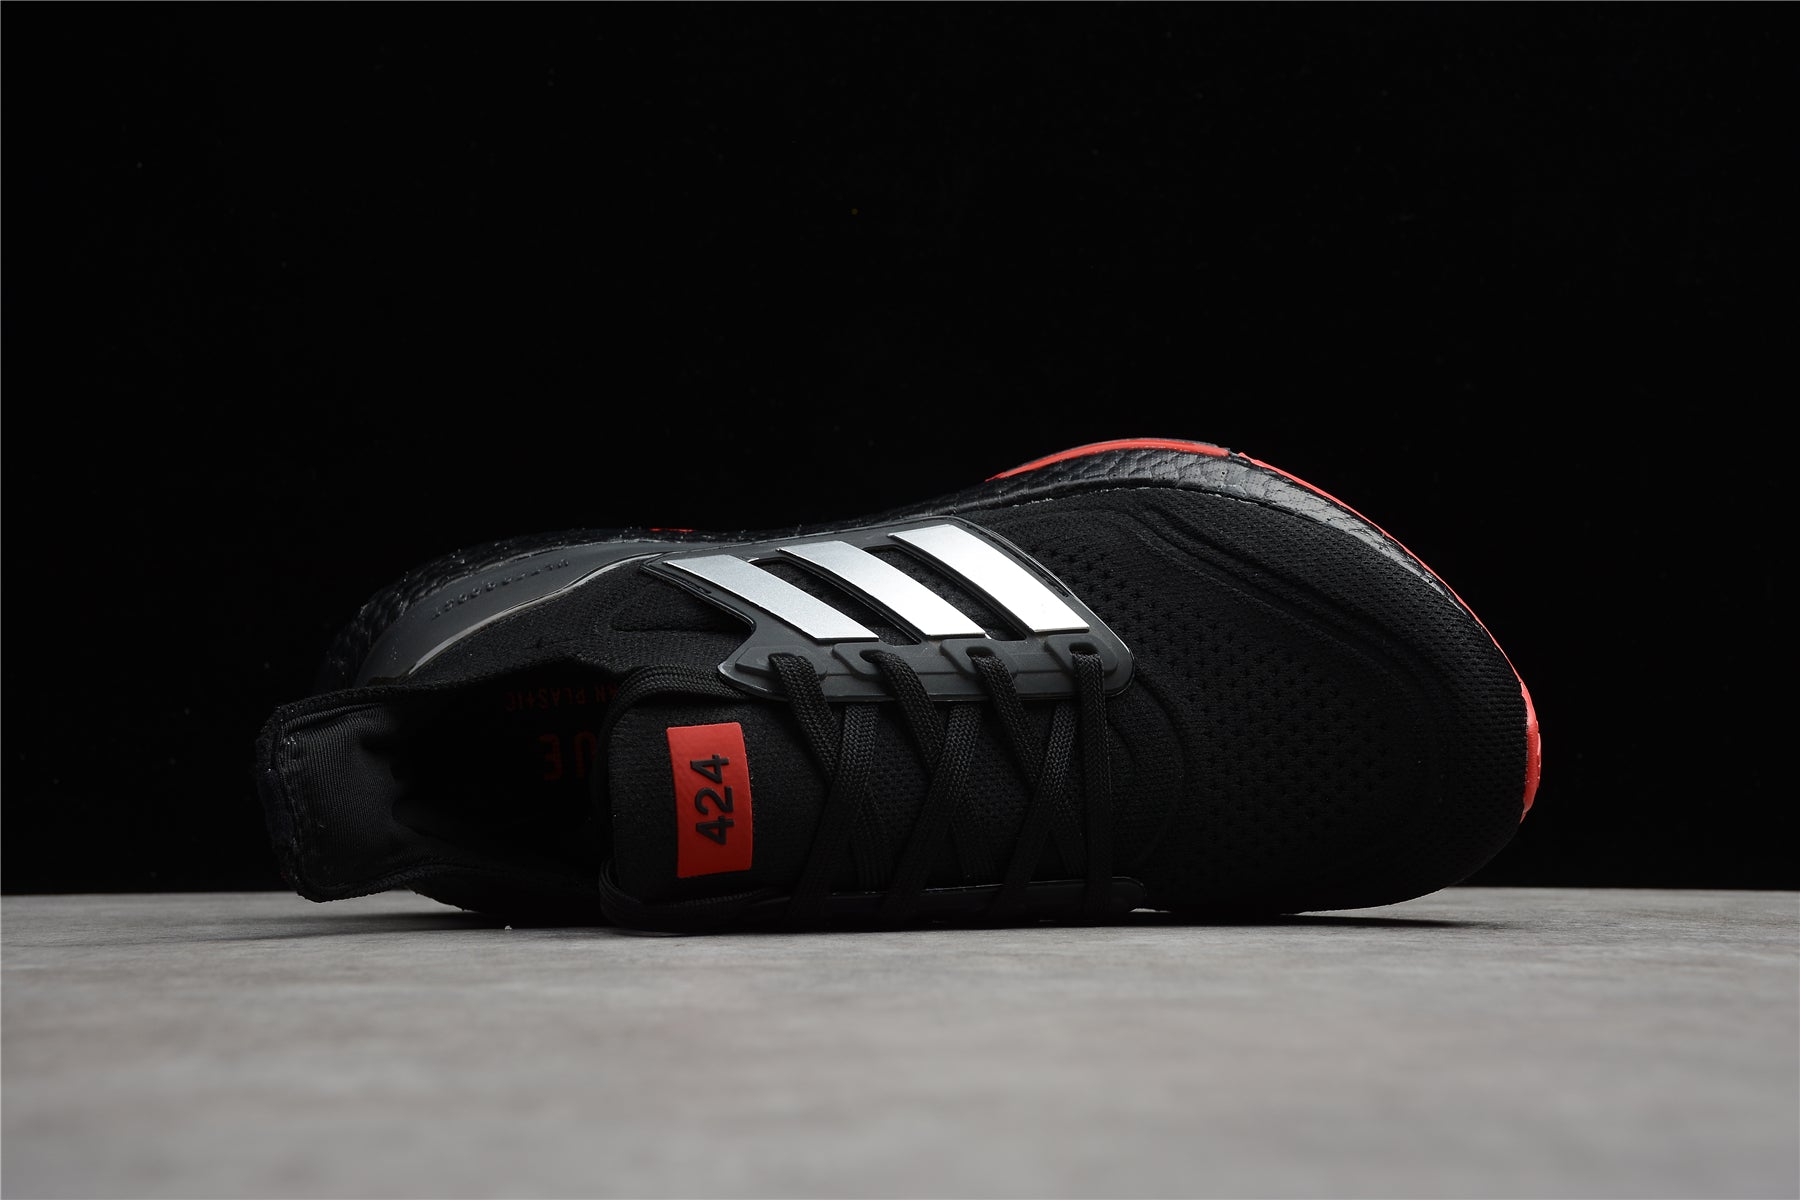 Chaussures Adidas ultraboost rouge noir